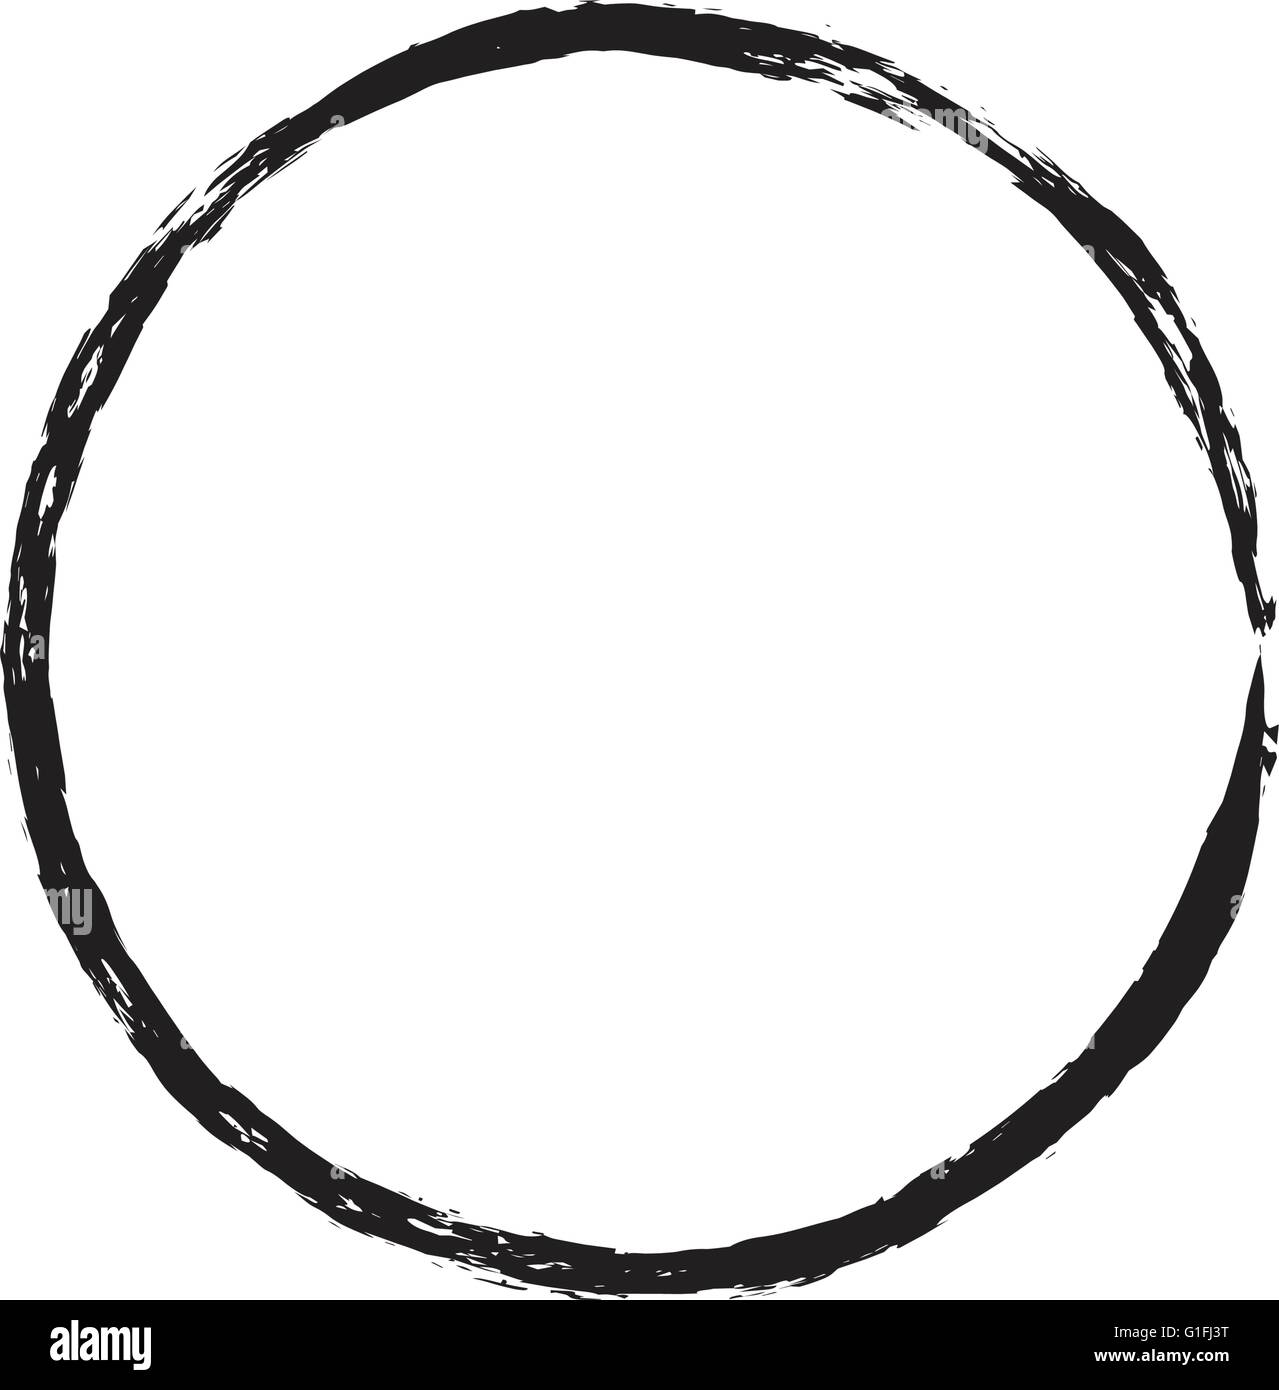 circle shape vector black grunge background Stock Vector